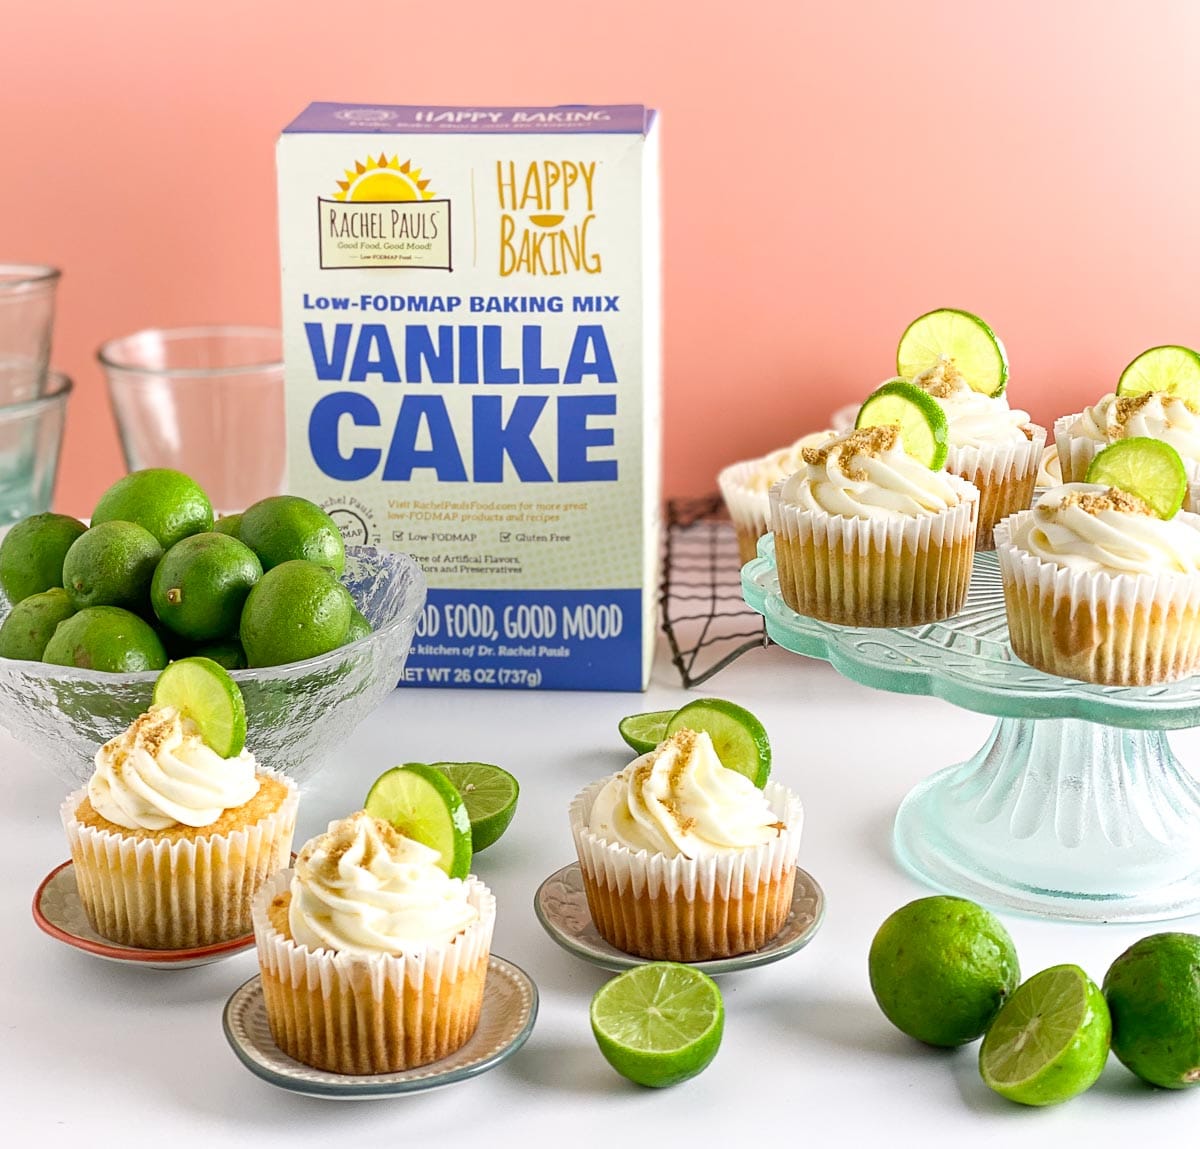 Rachel Pauls Key Lime Cupcakes with box 2